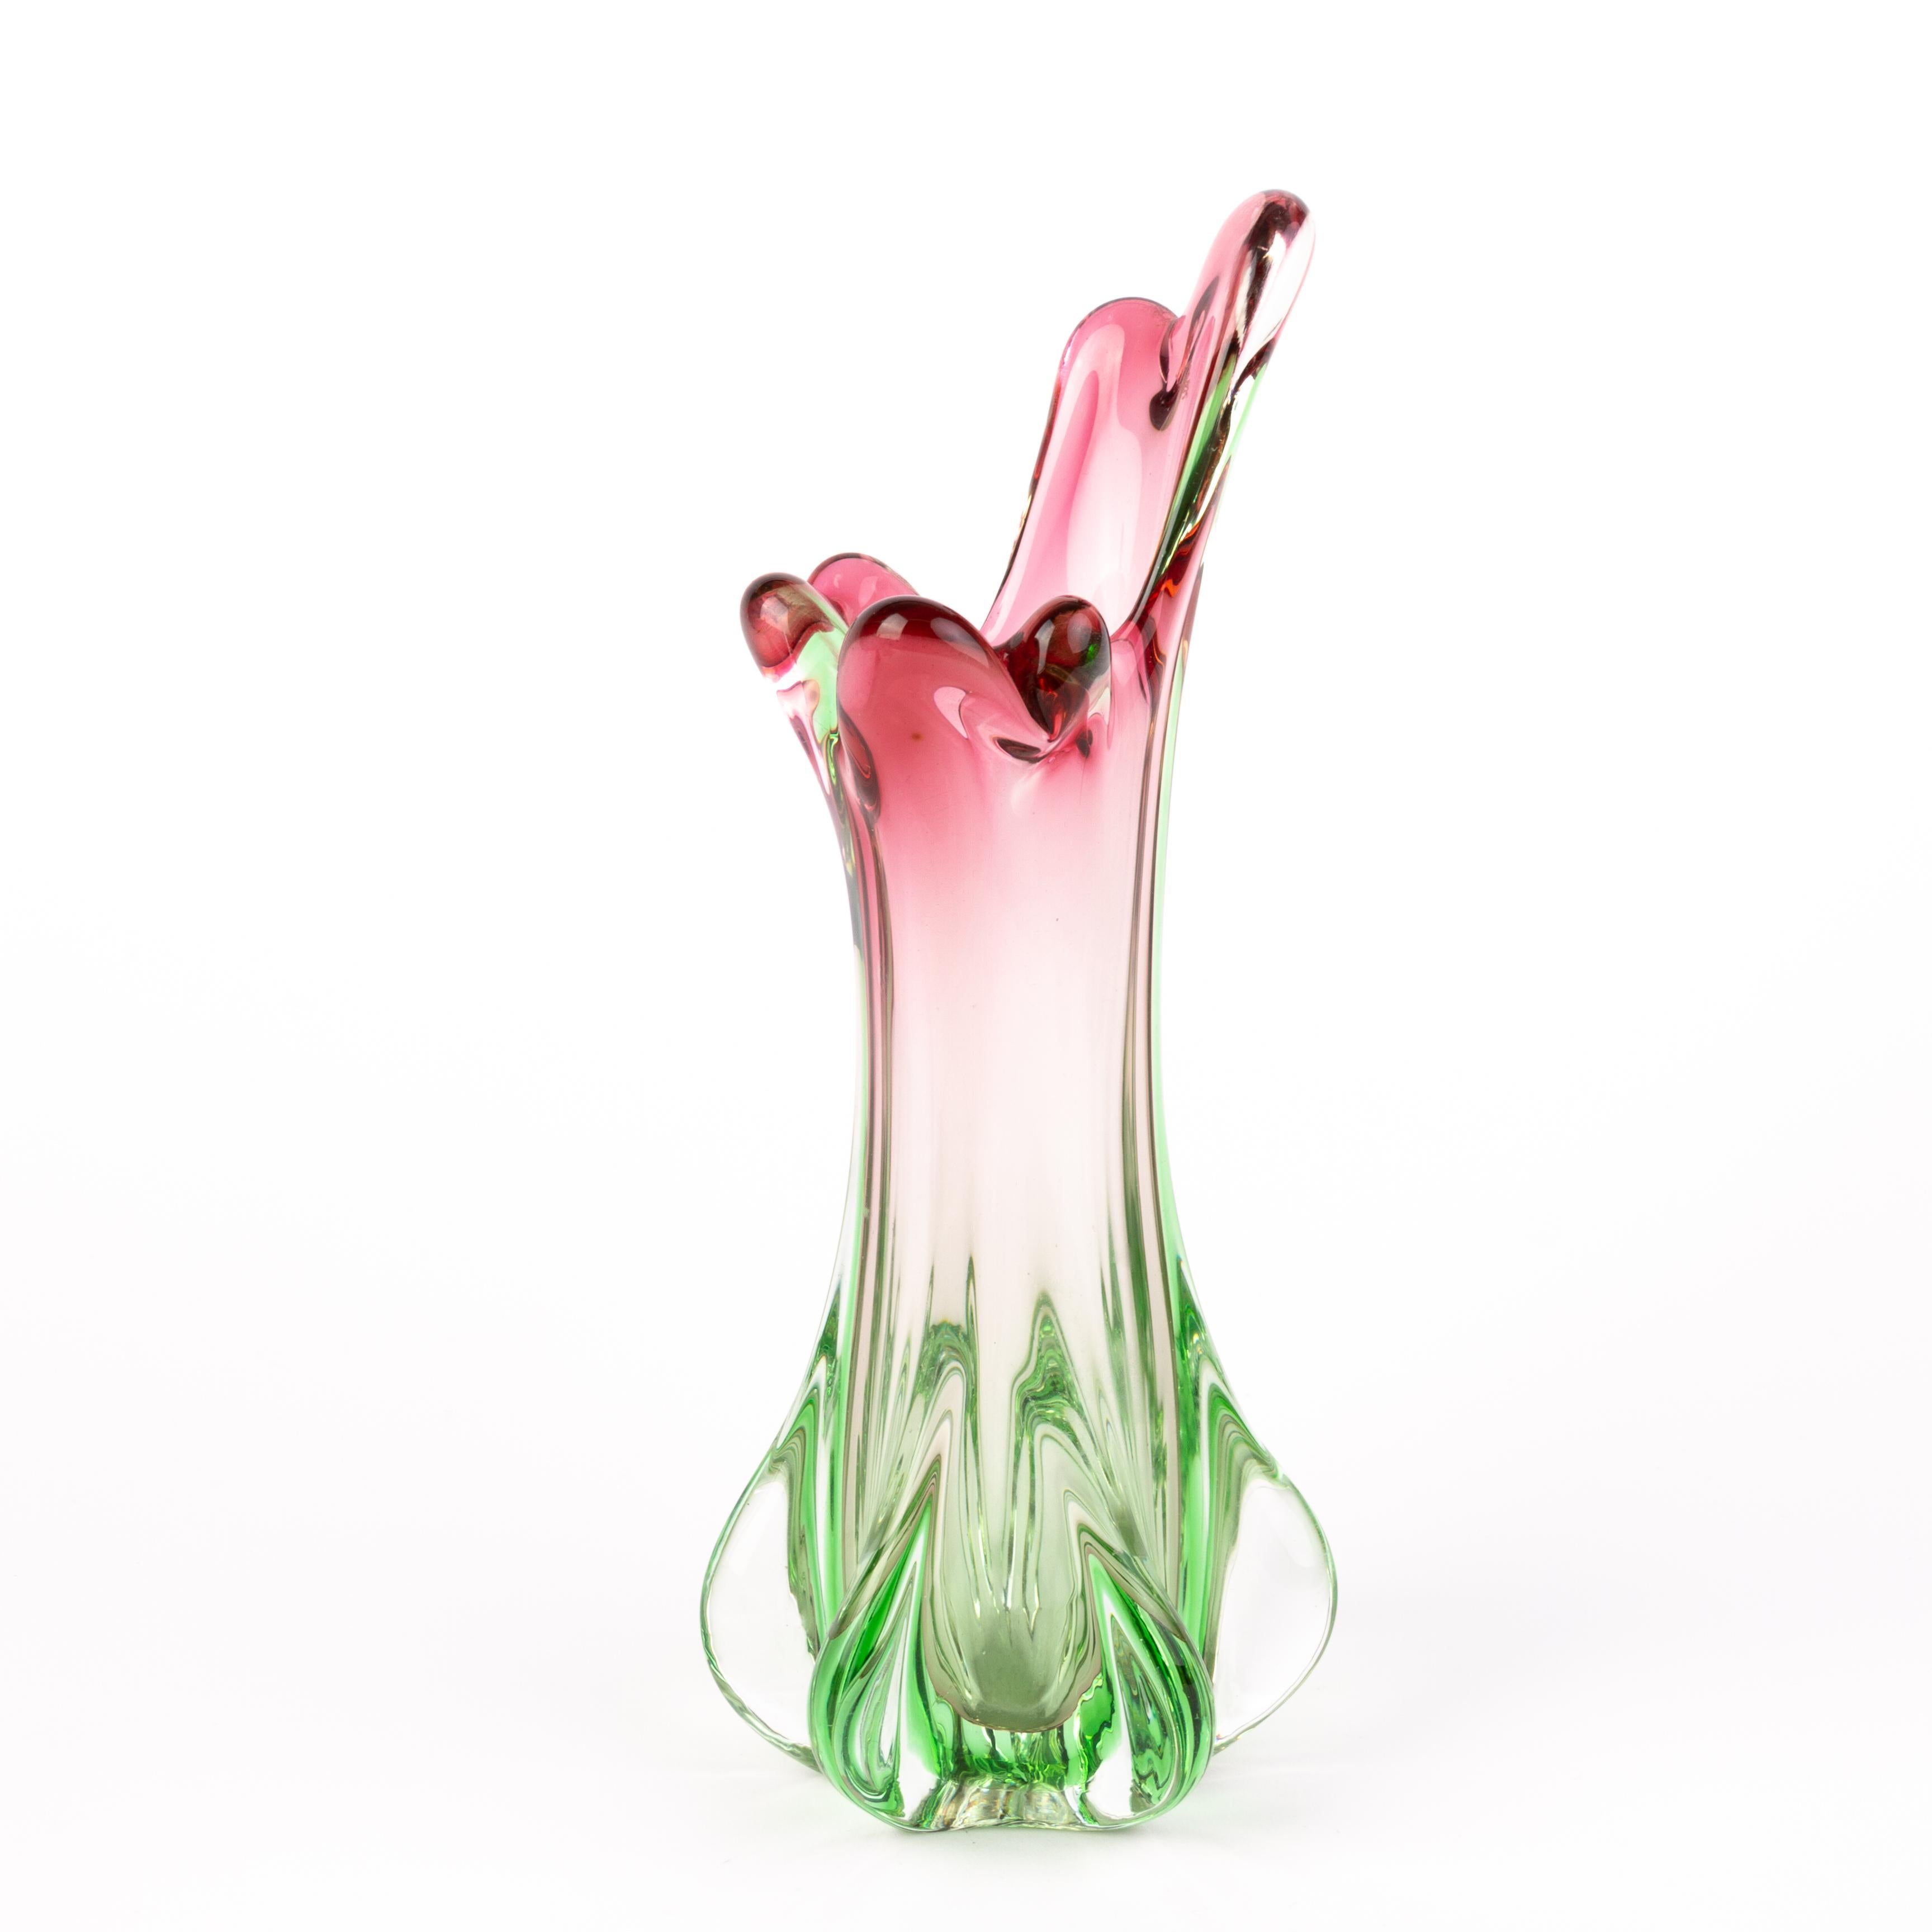 Murano Venetian Glass Designer Vase
Good condition
Free international shipping.